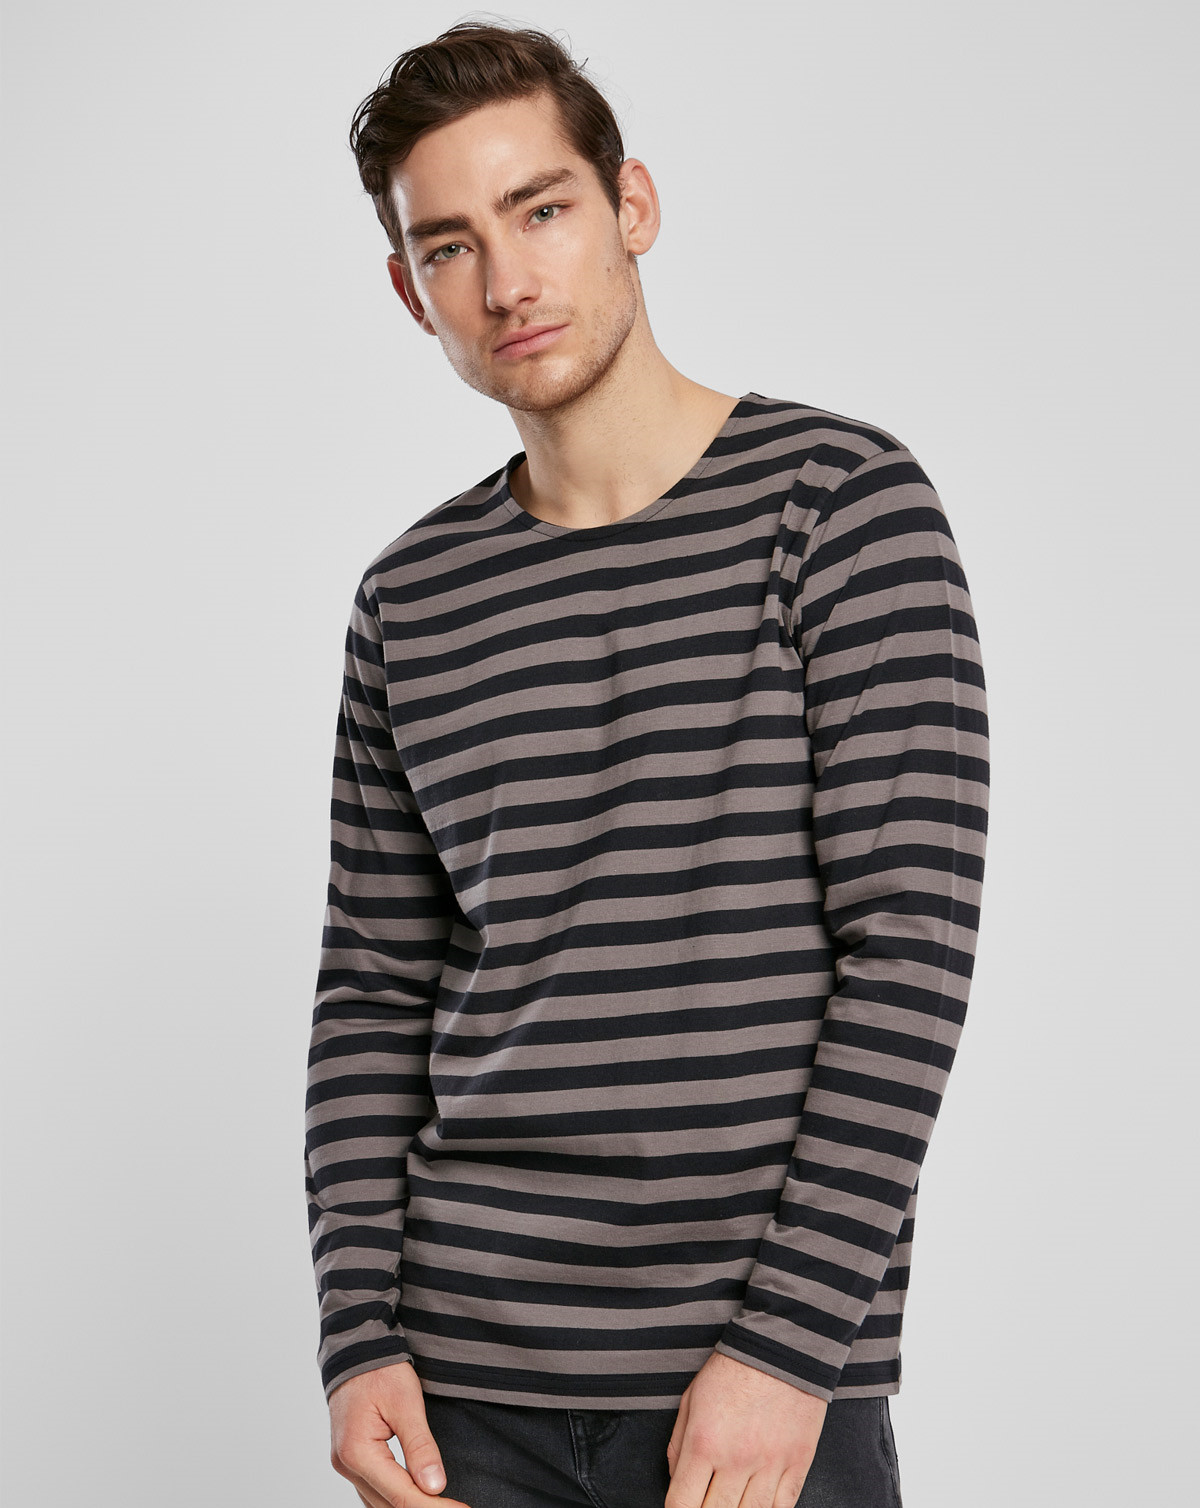 #2 - Urban Classics Regular StripeLong Sleeve T-Shirt (Asphalt / Black, XL)